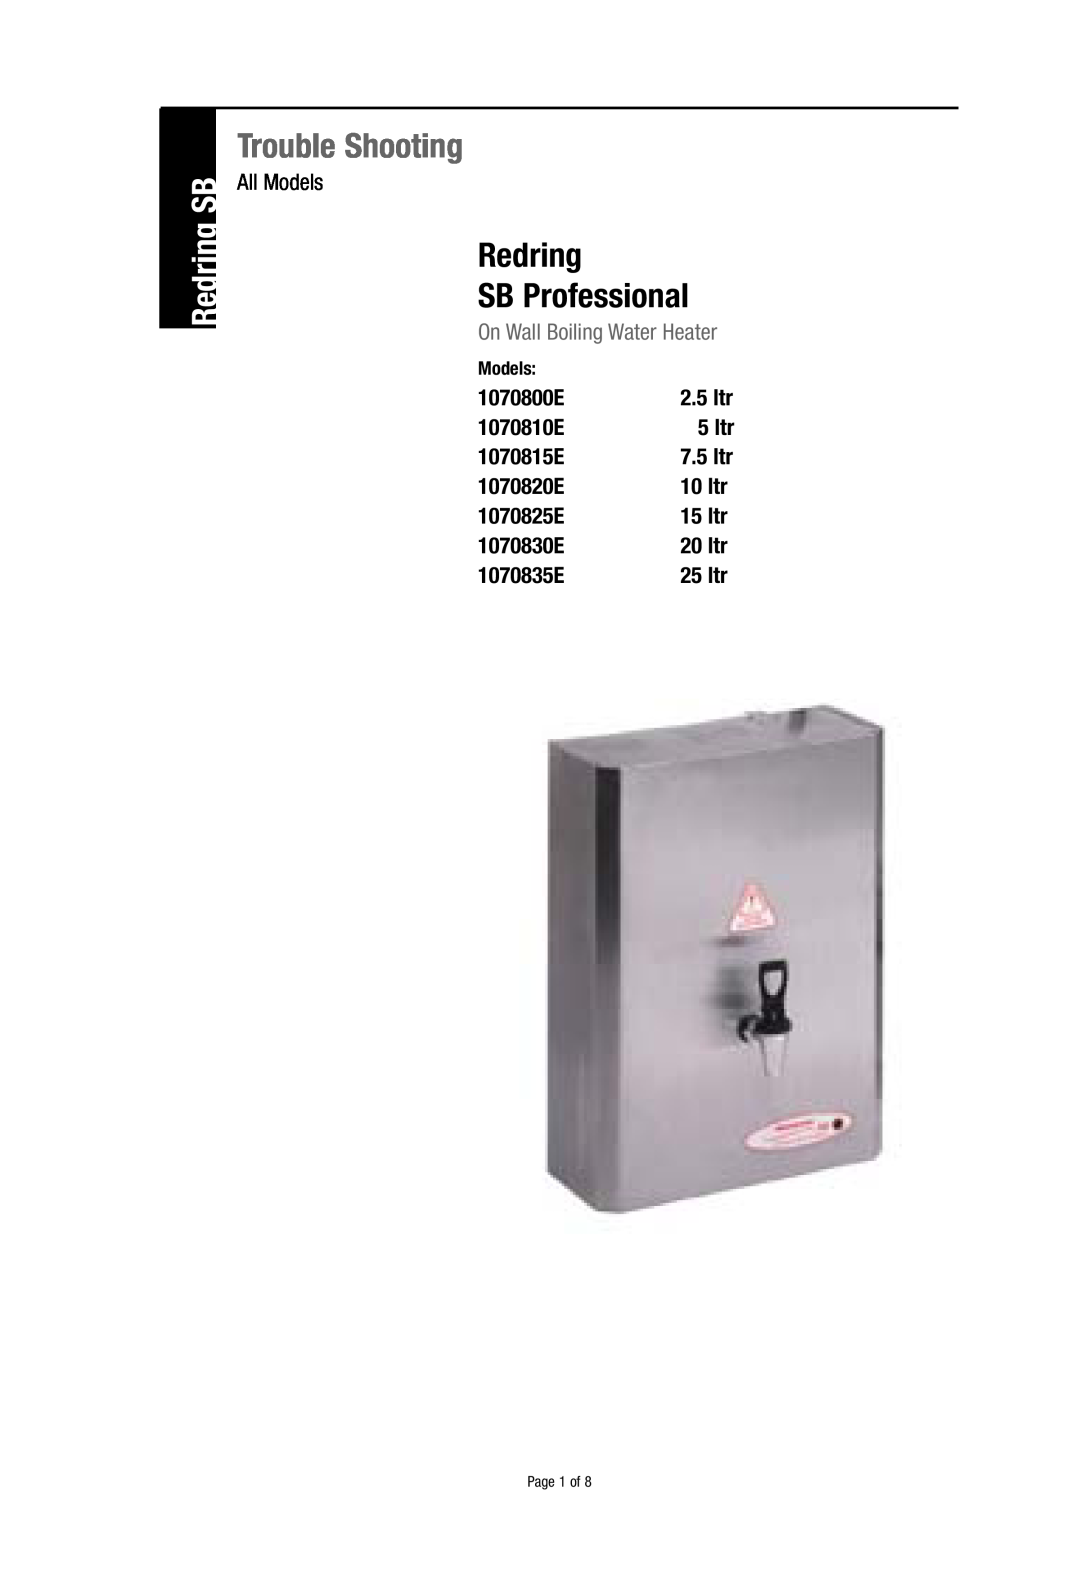 Redring 1070830E manual Redring SB Professional, Trouble Shooting, On Wall Boiling Water Heater, 1070800E, 1070810E 